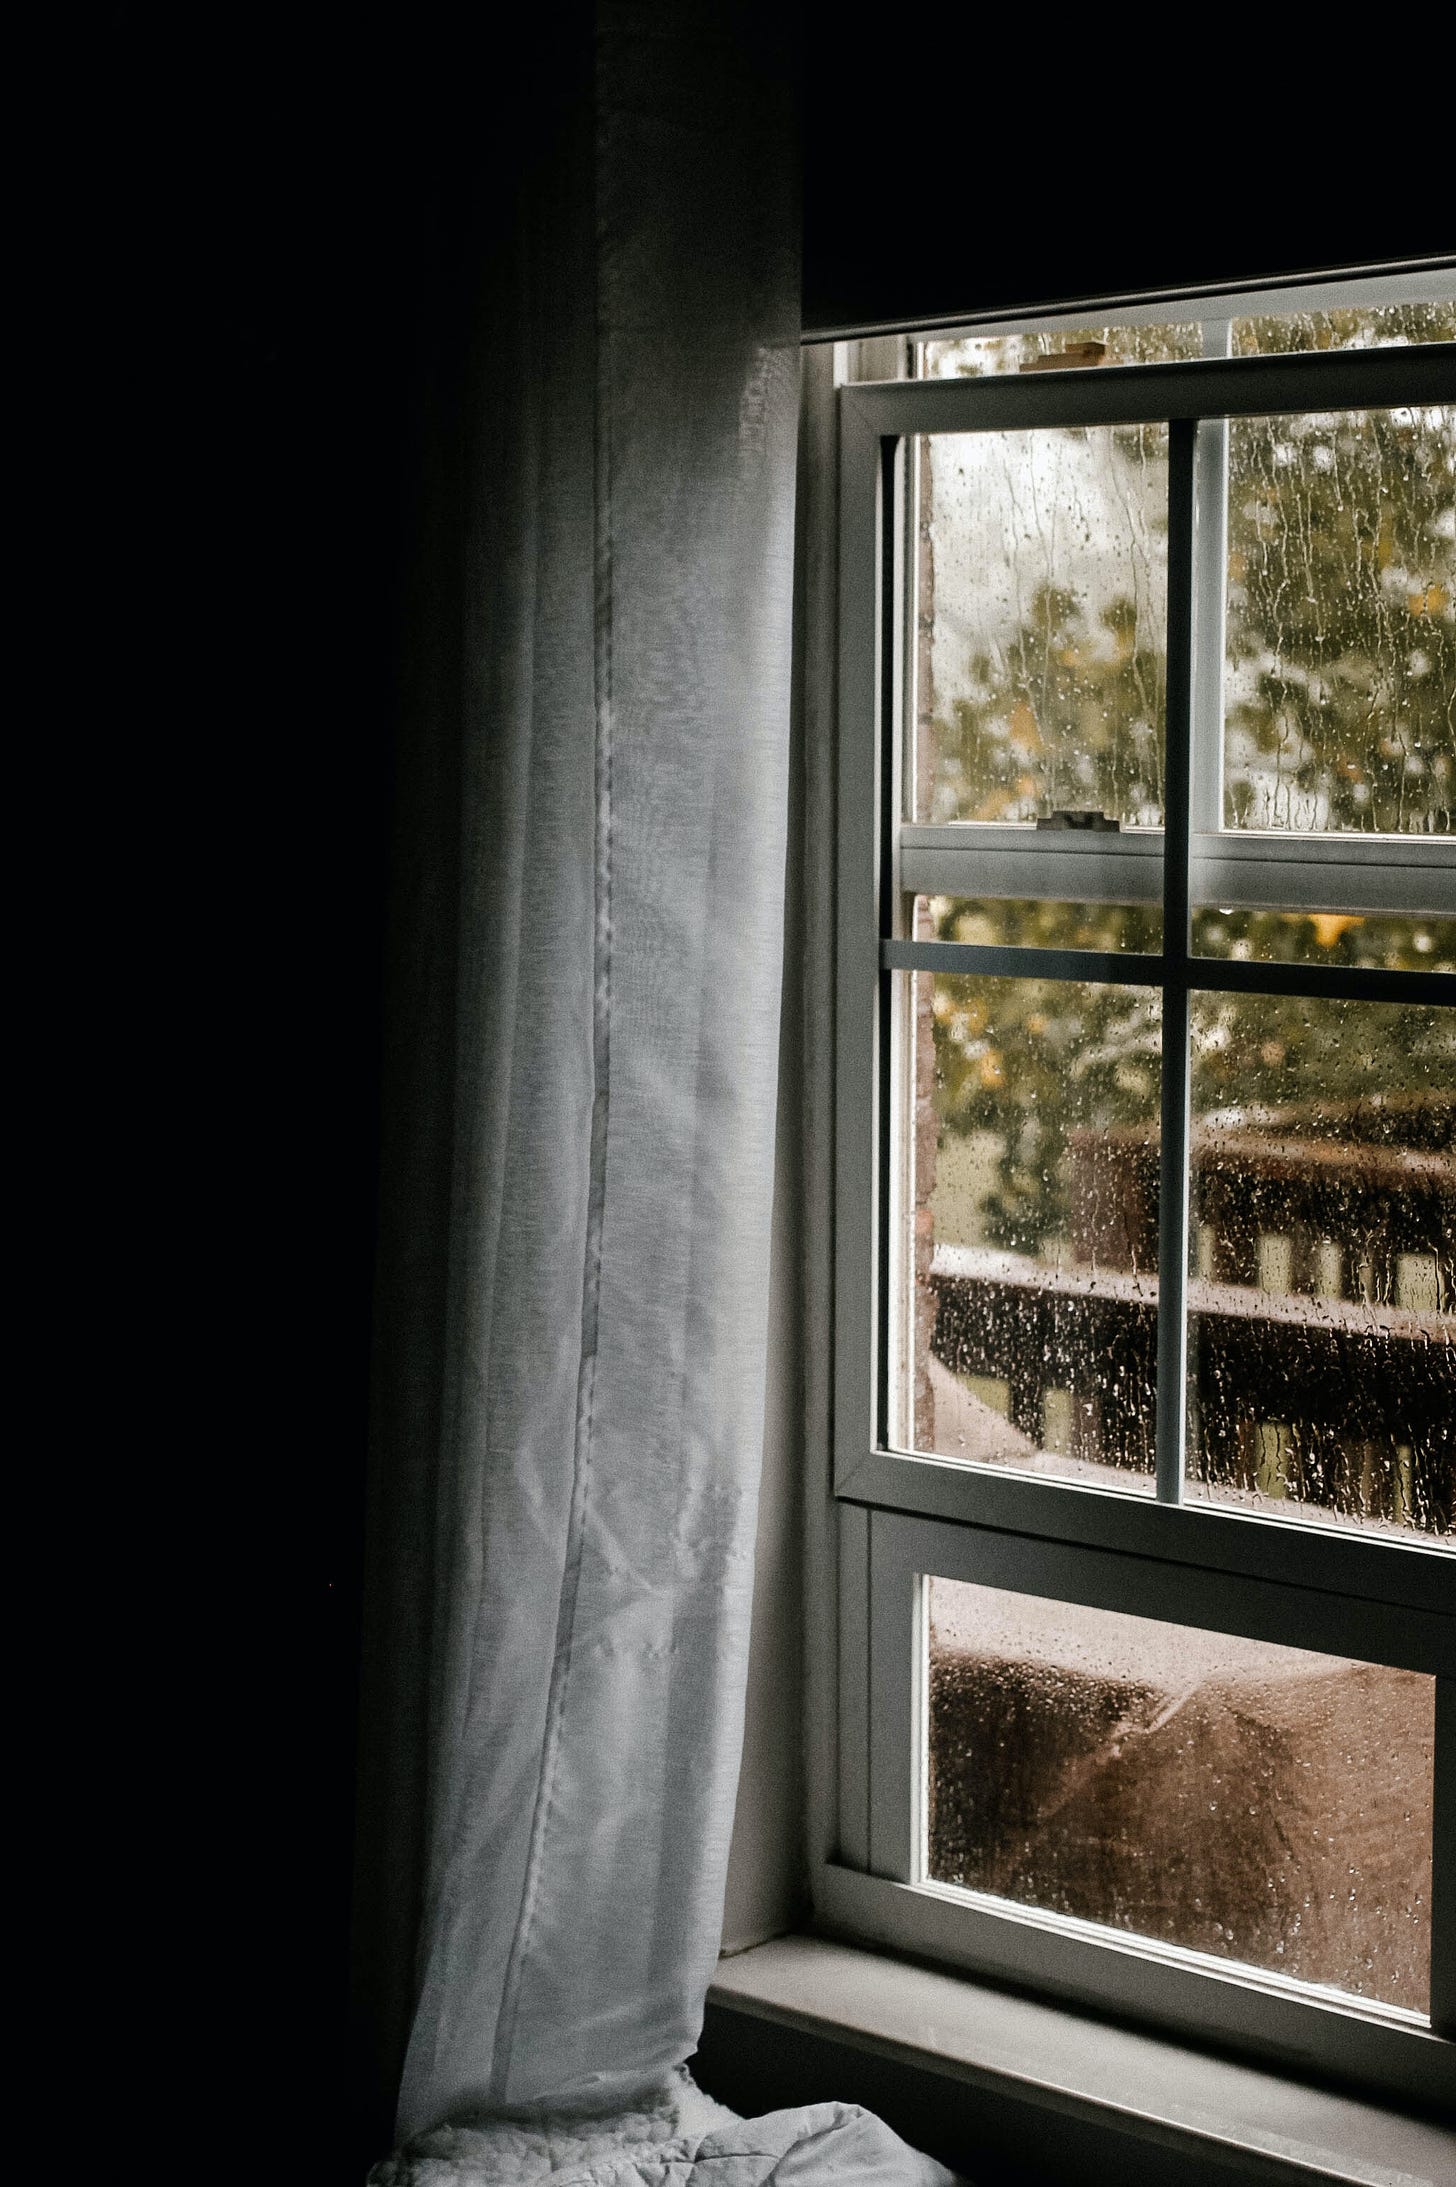 Inside a cozy house, rain run downs a window.